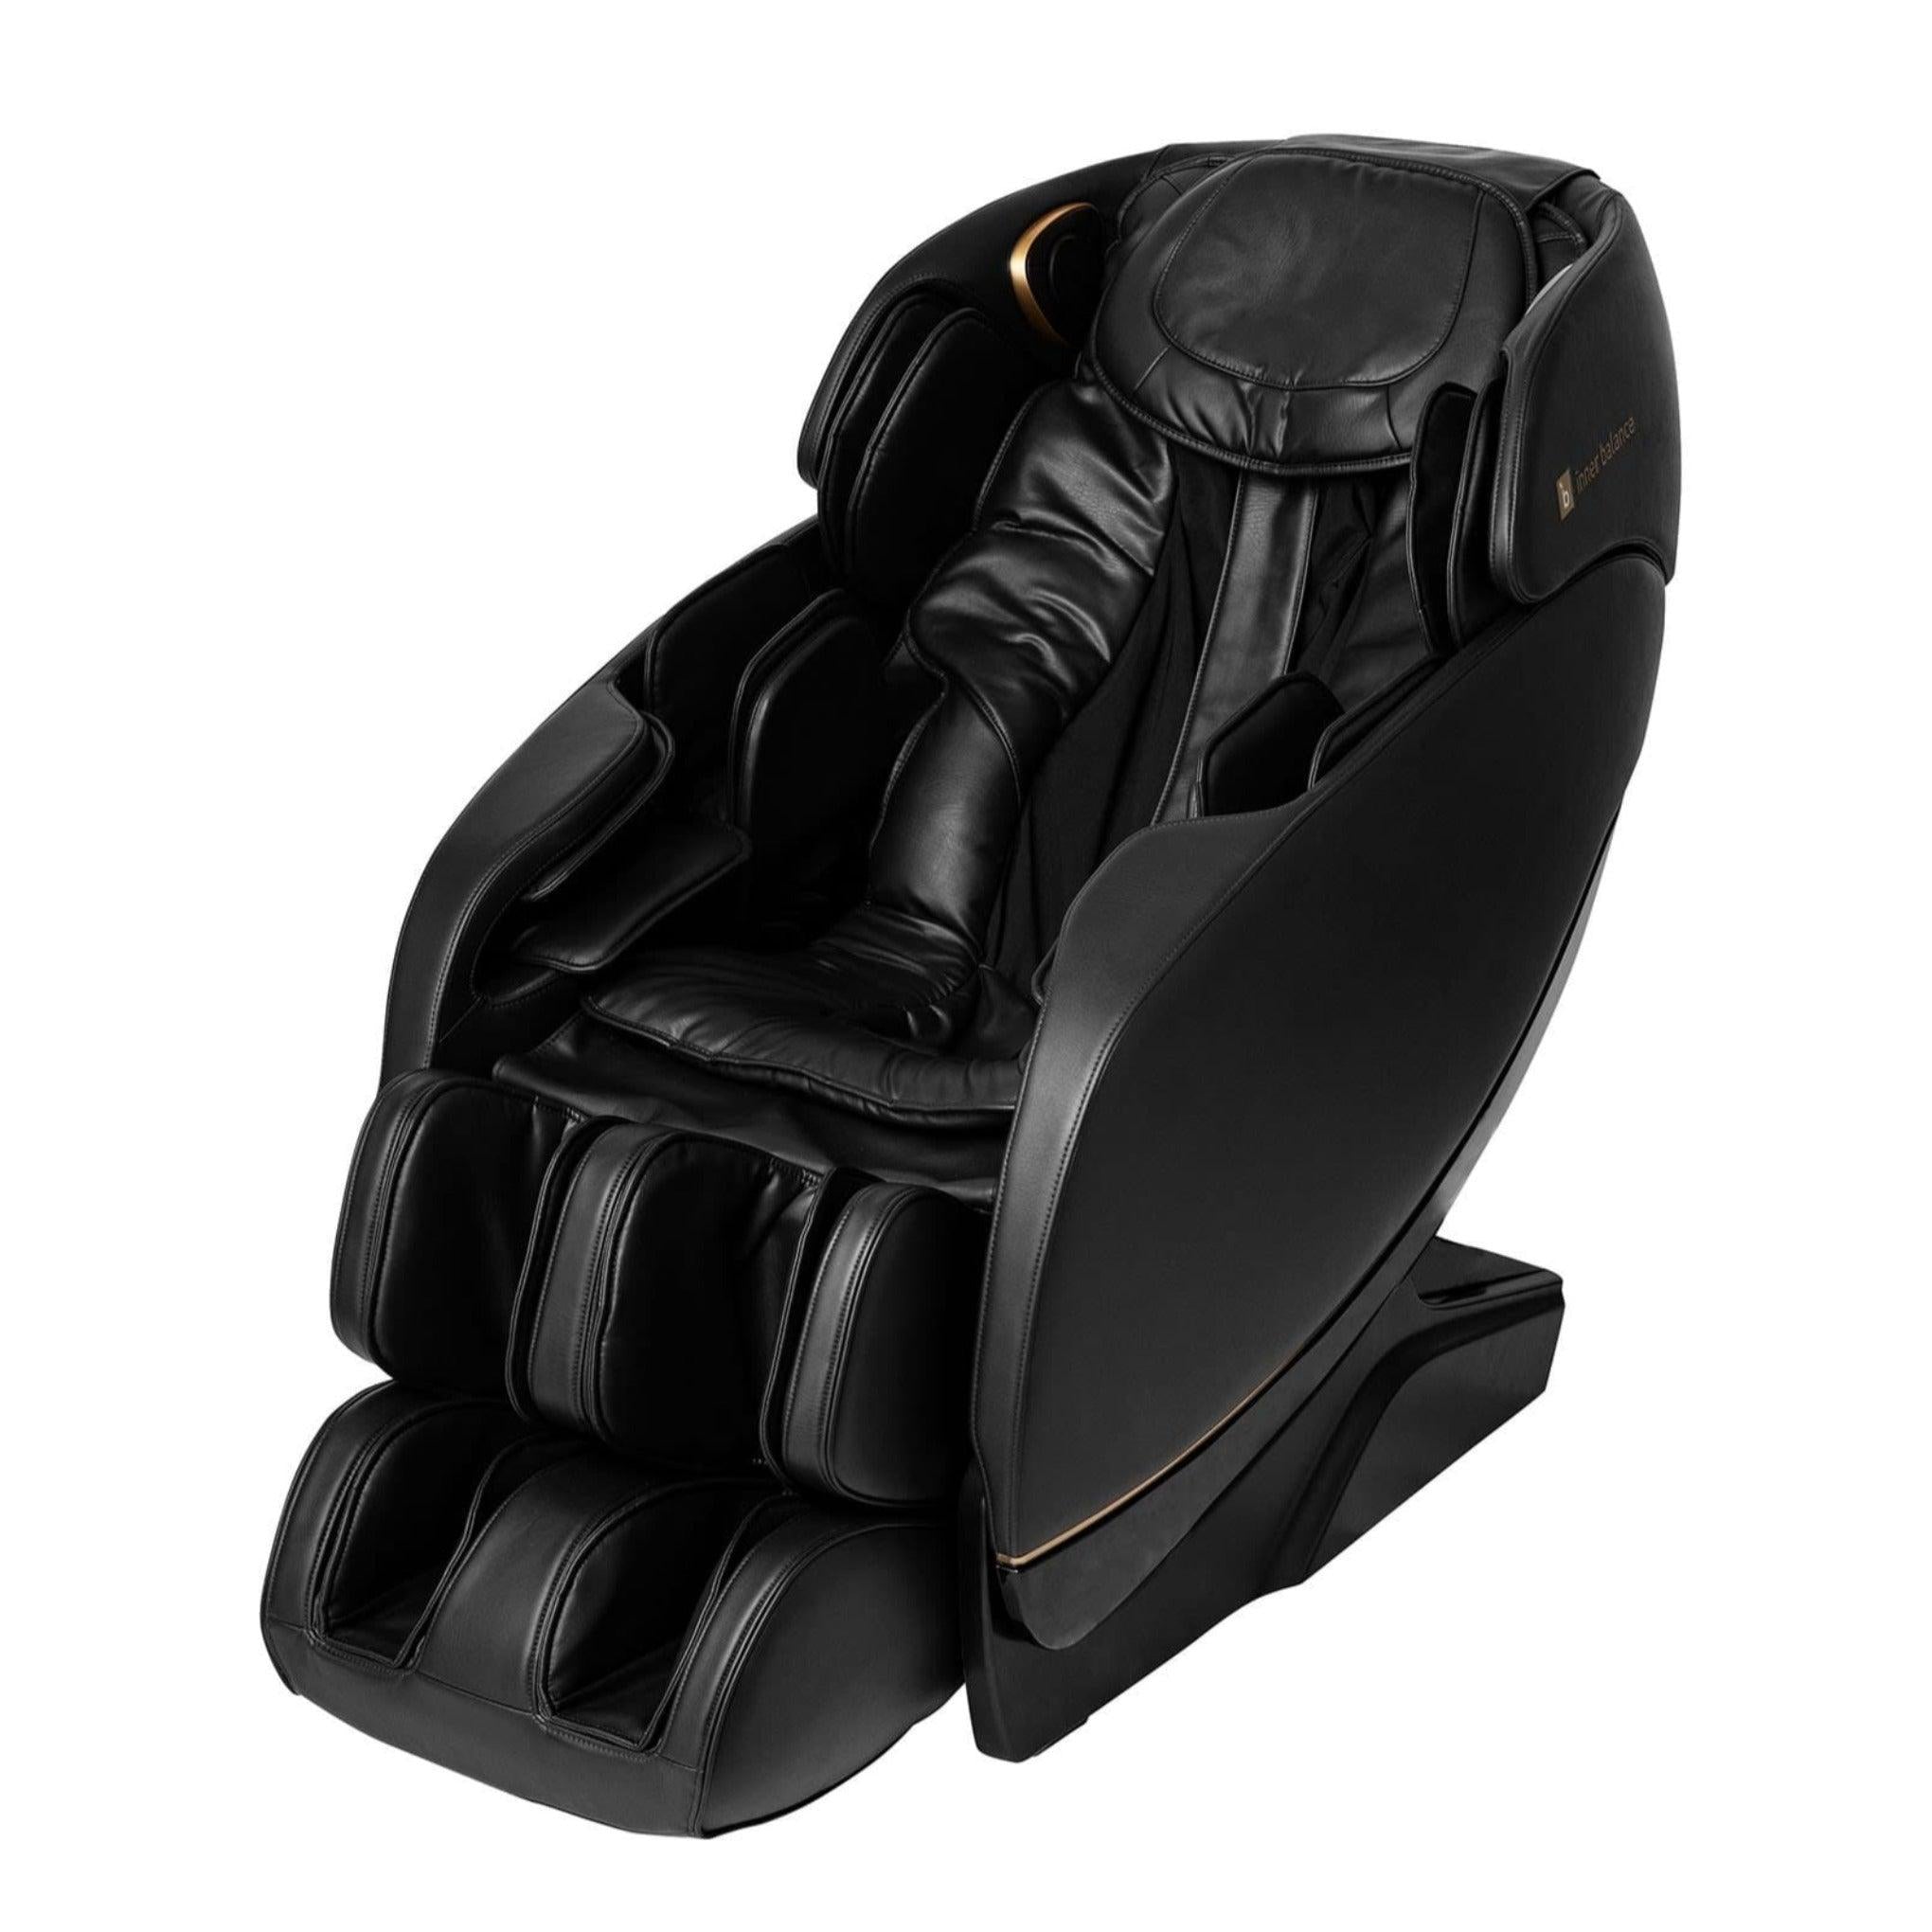 Inner Balance Wellness Jin 2.0 Deluxe Heated SL-Track Massage Chair